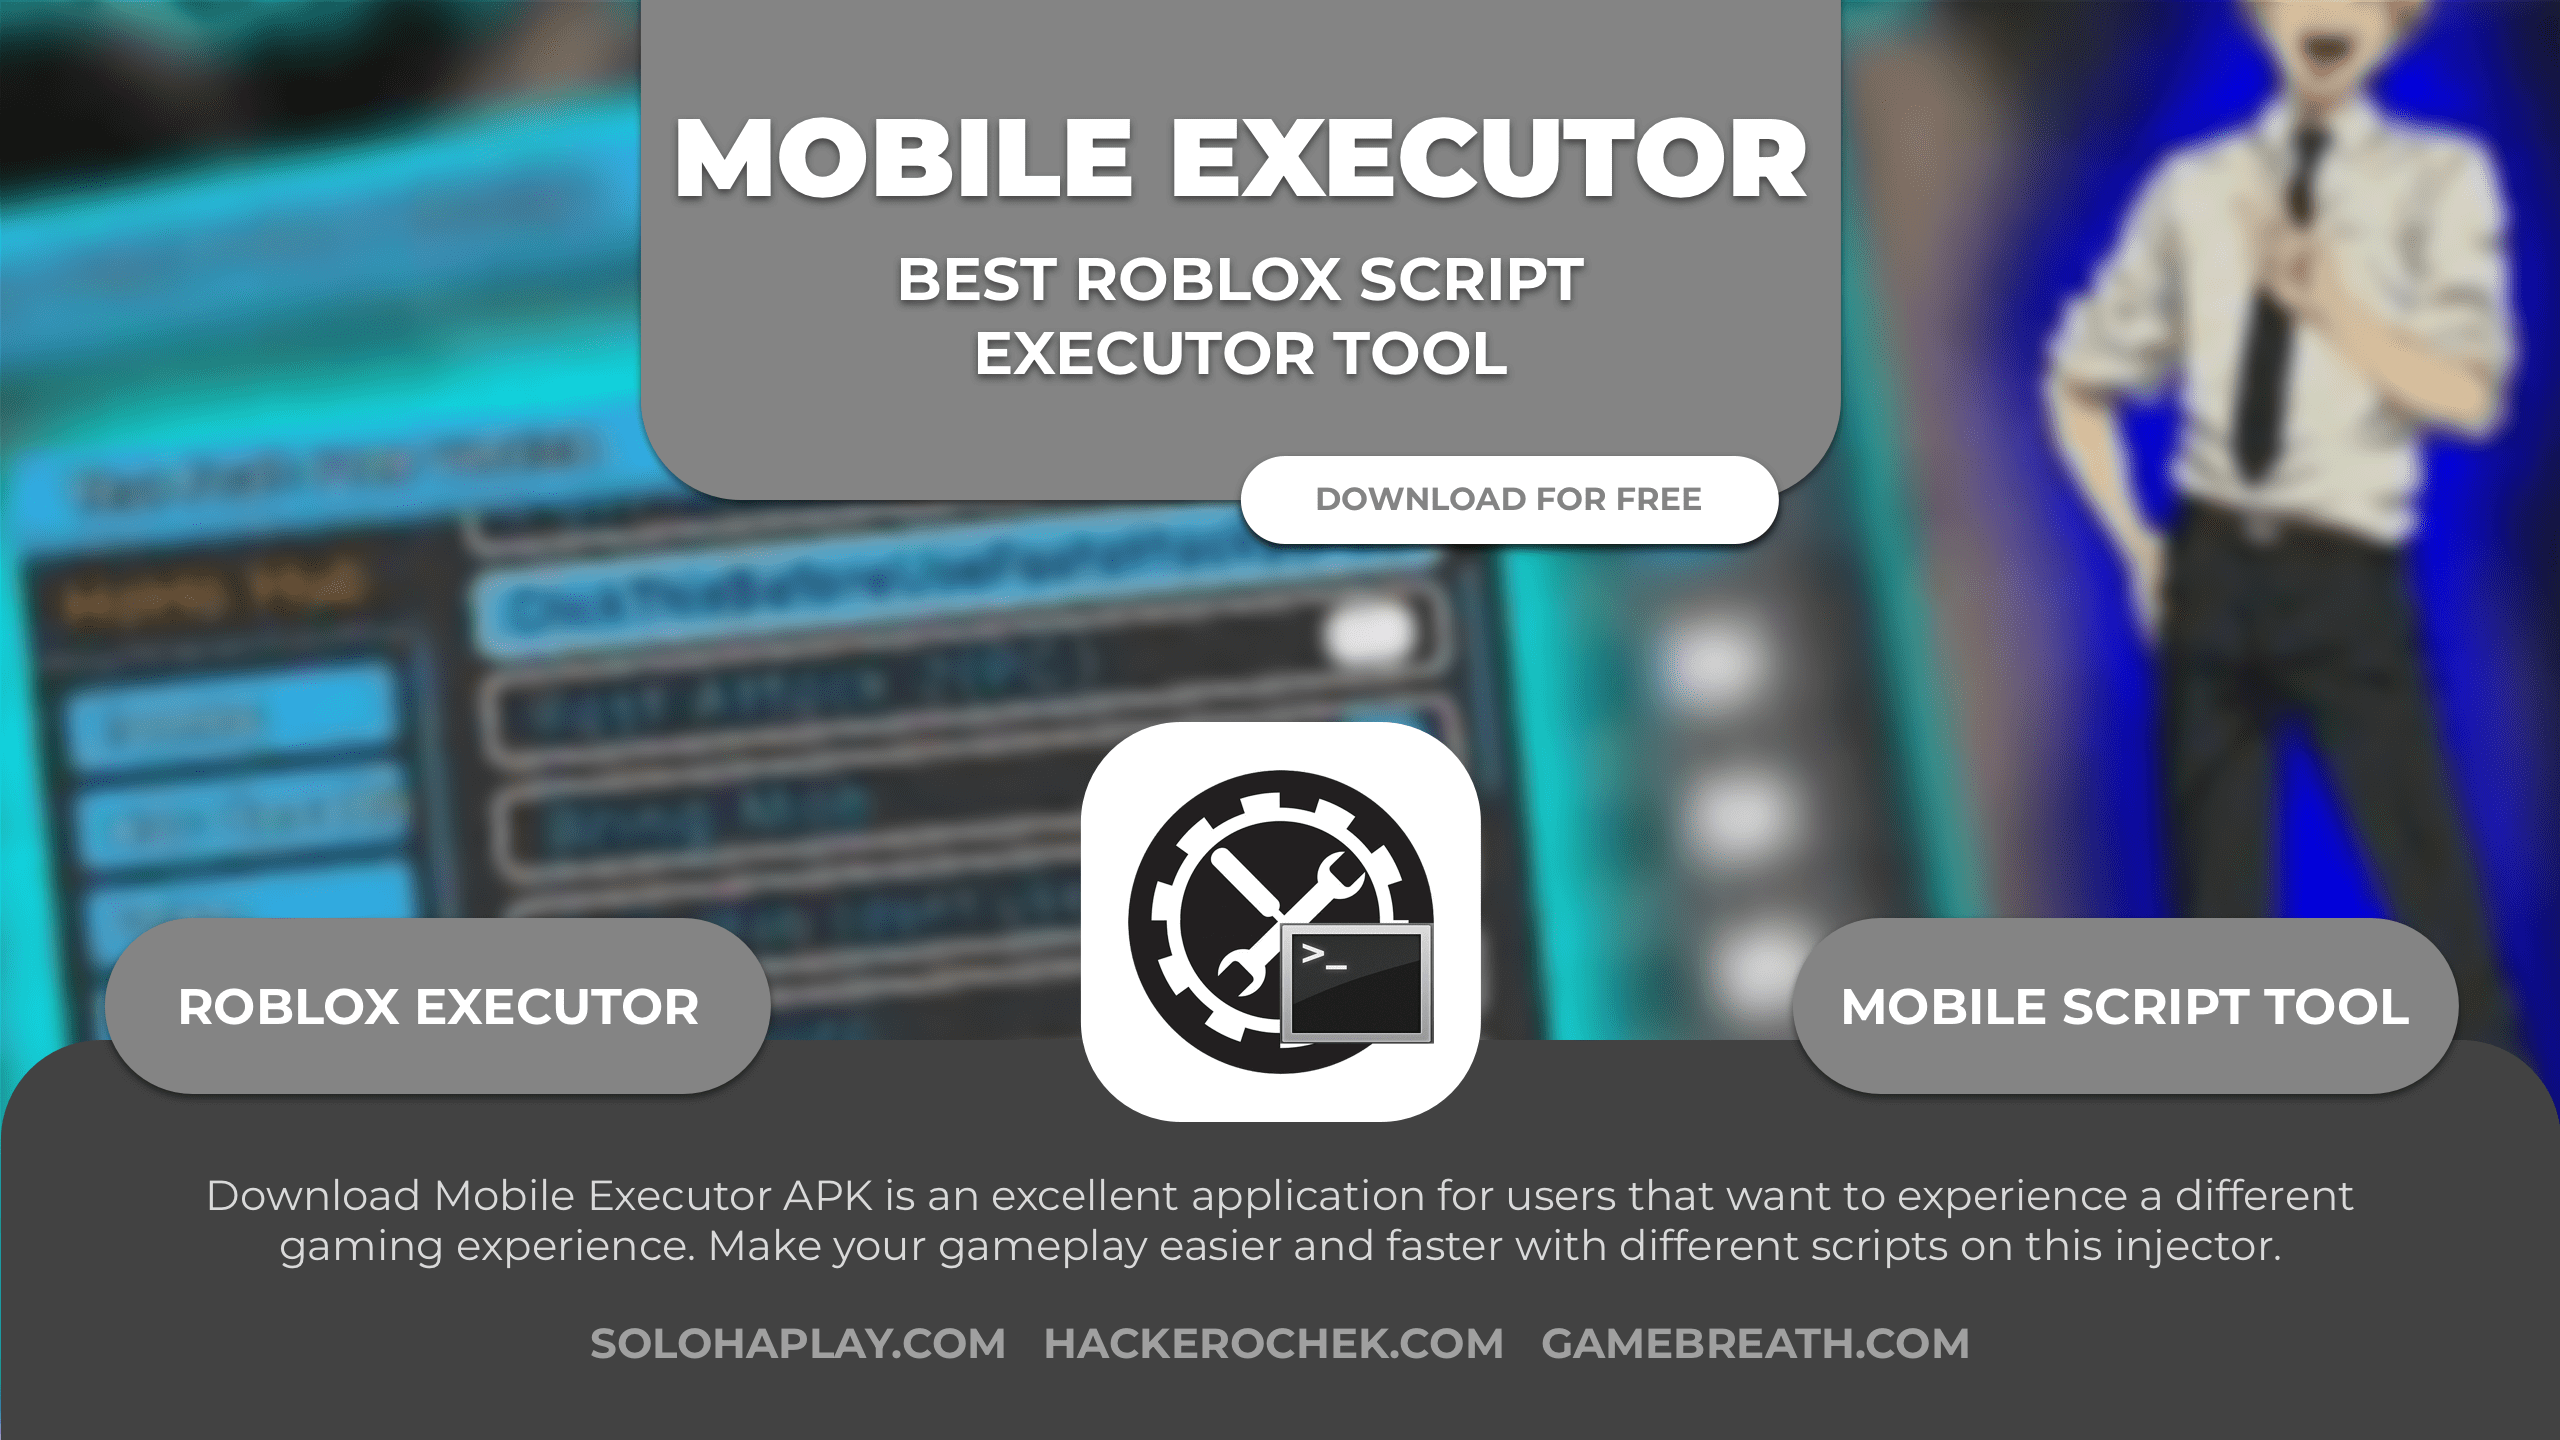 Download Mobile Executor Mobile APK Mod (Latest version) - Game Breath